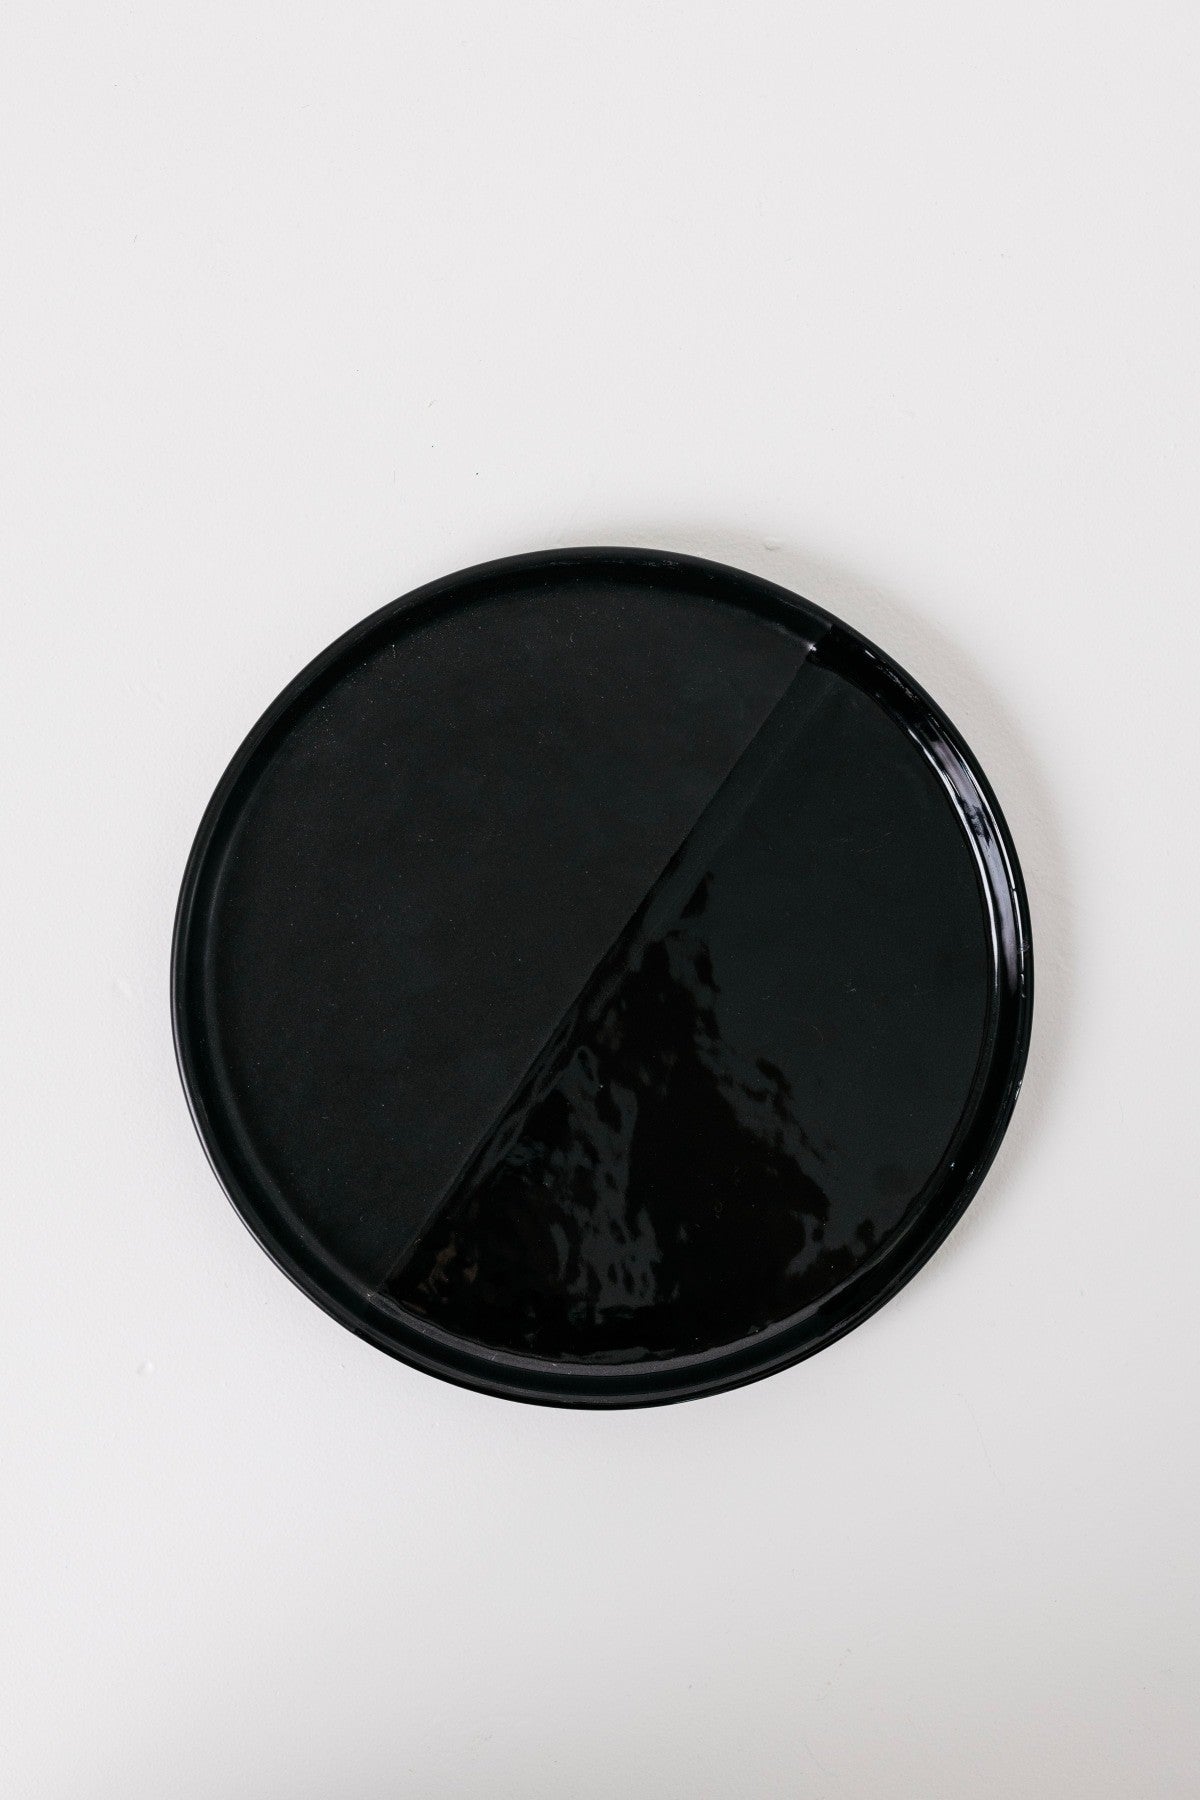 Sable Dinner Plate - Matte Black/Glossy Black - Set of 6